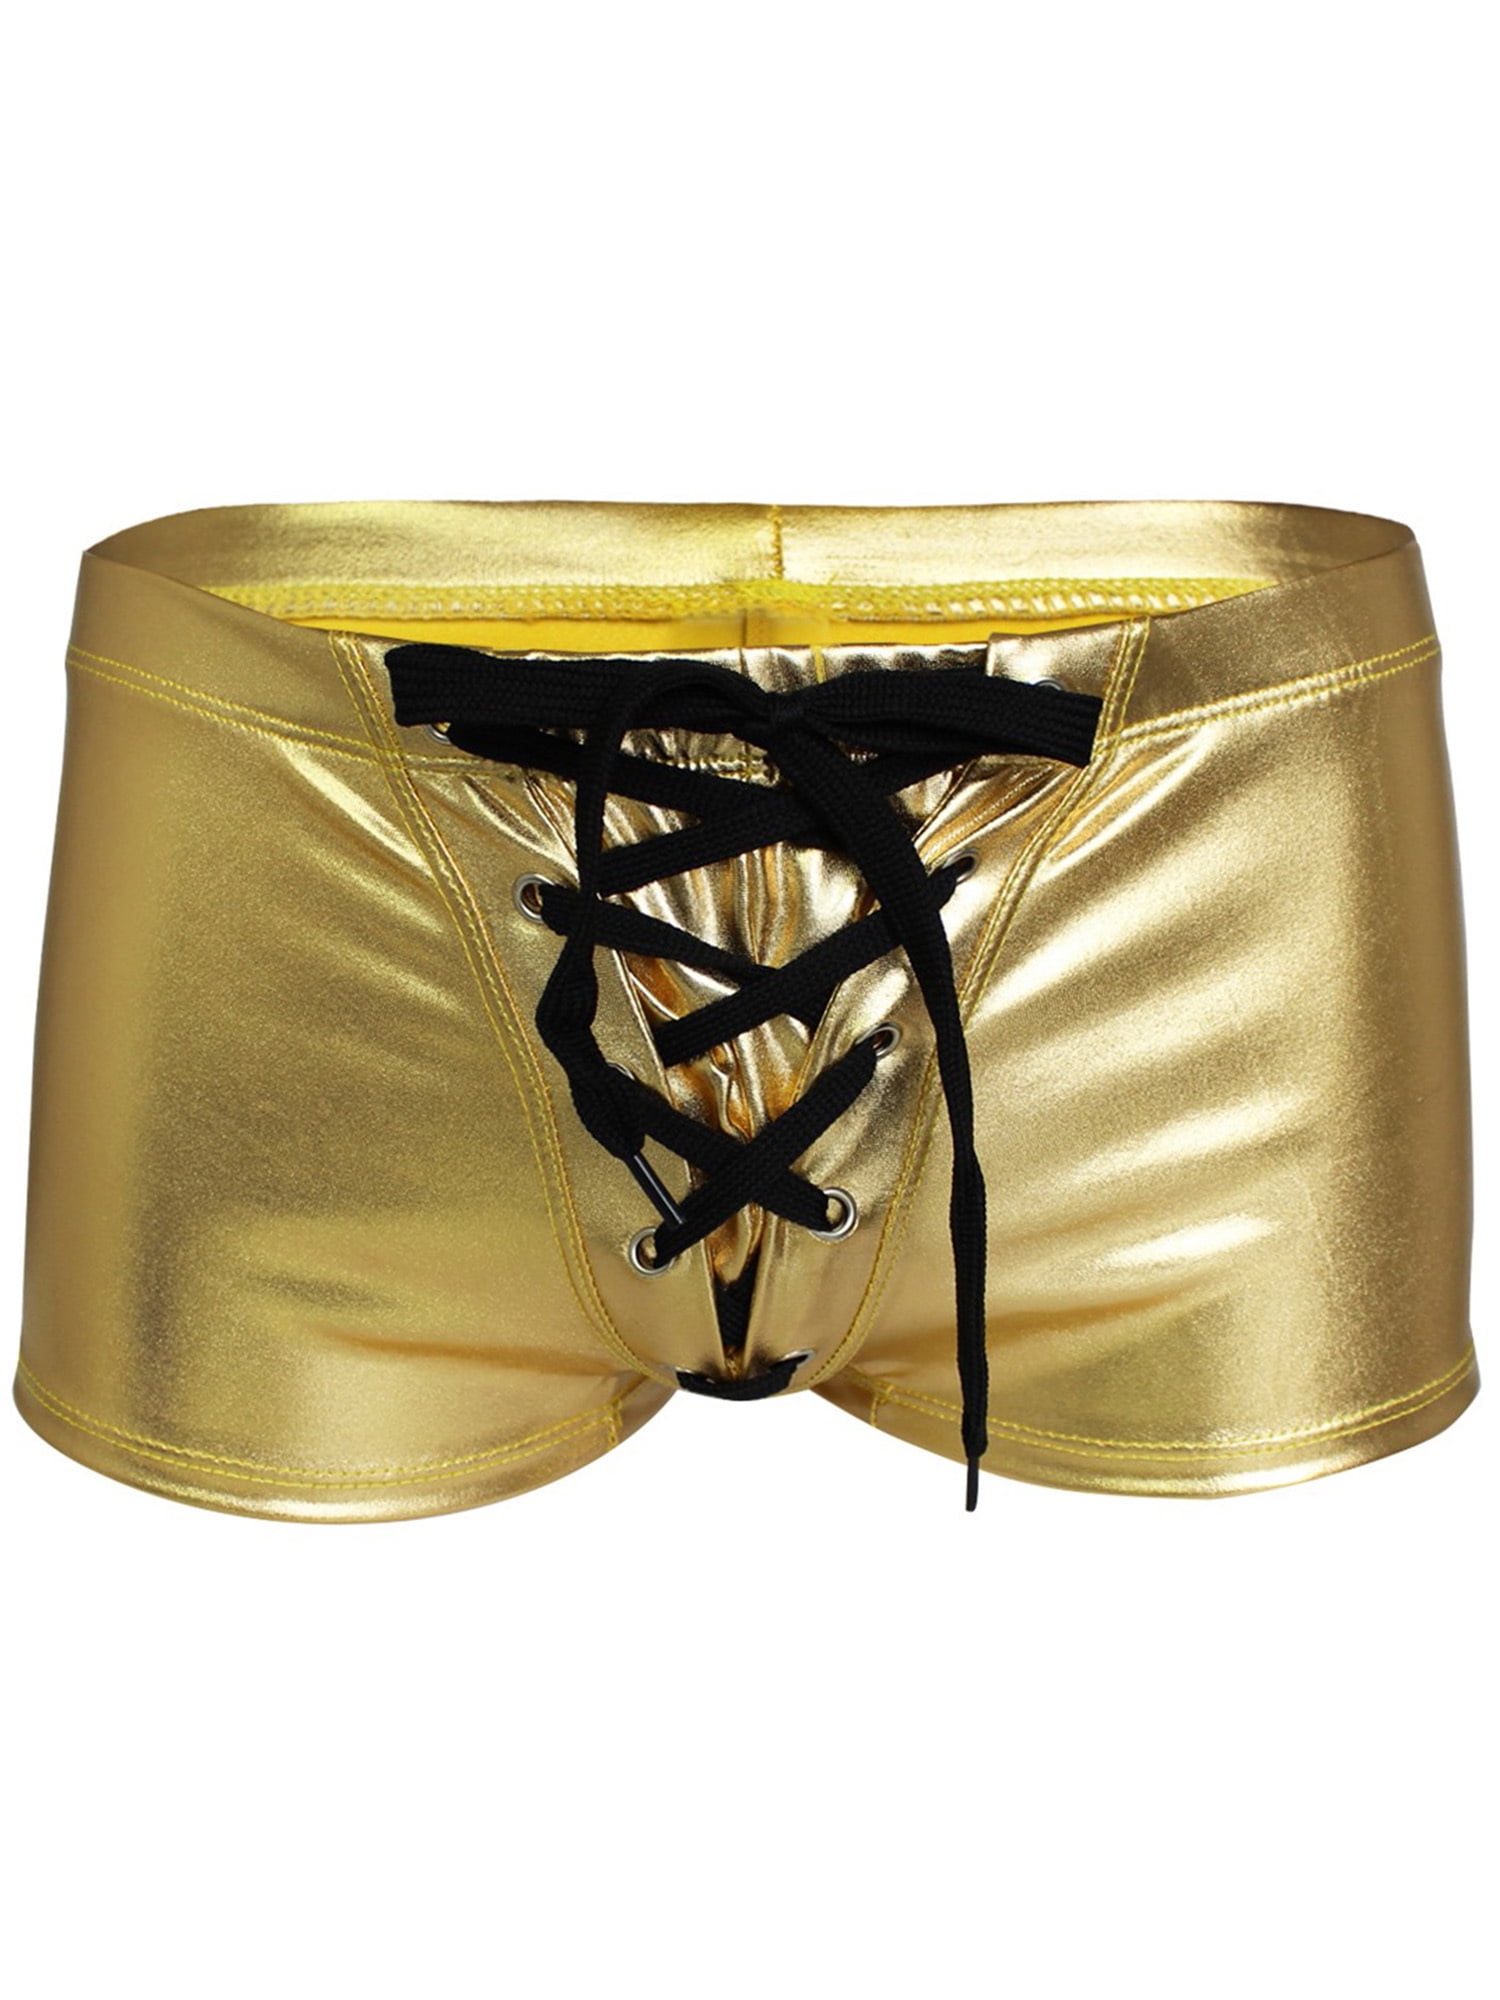 YiZYiF Mens Metallic Boxers Underwear Shiny Patent Leather Drawstring ...